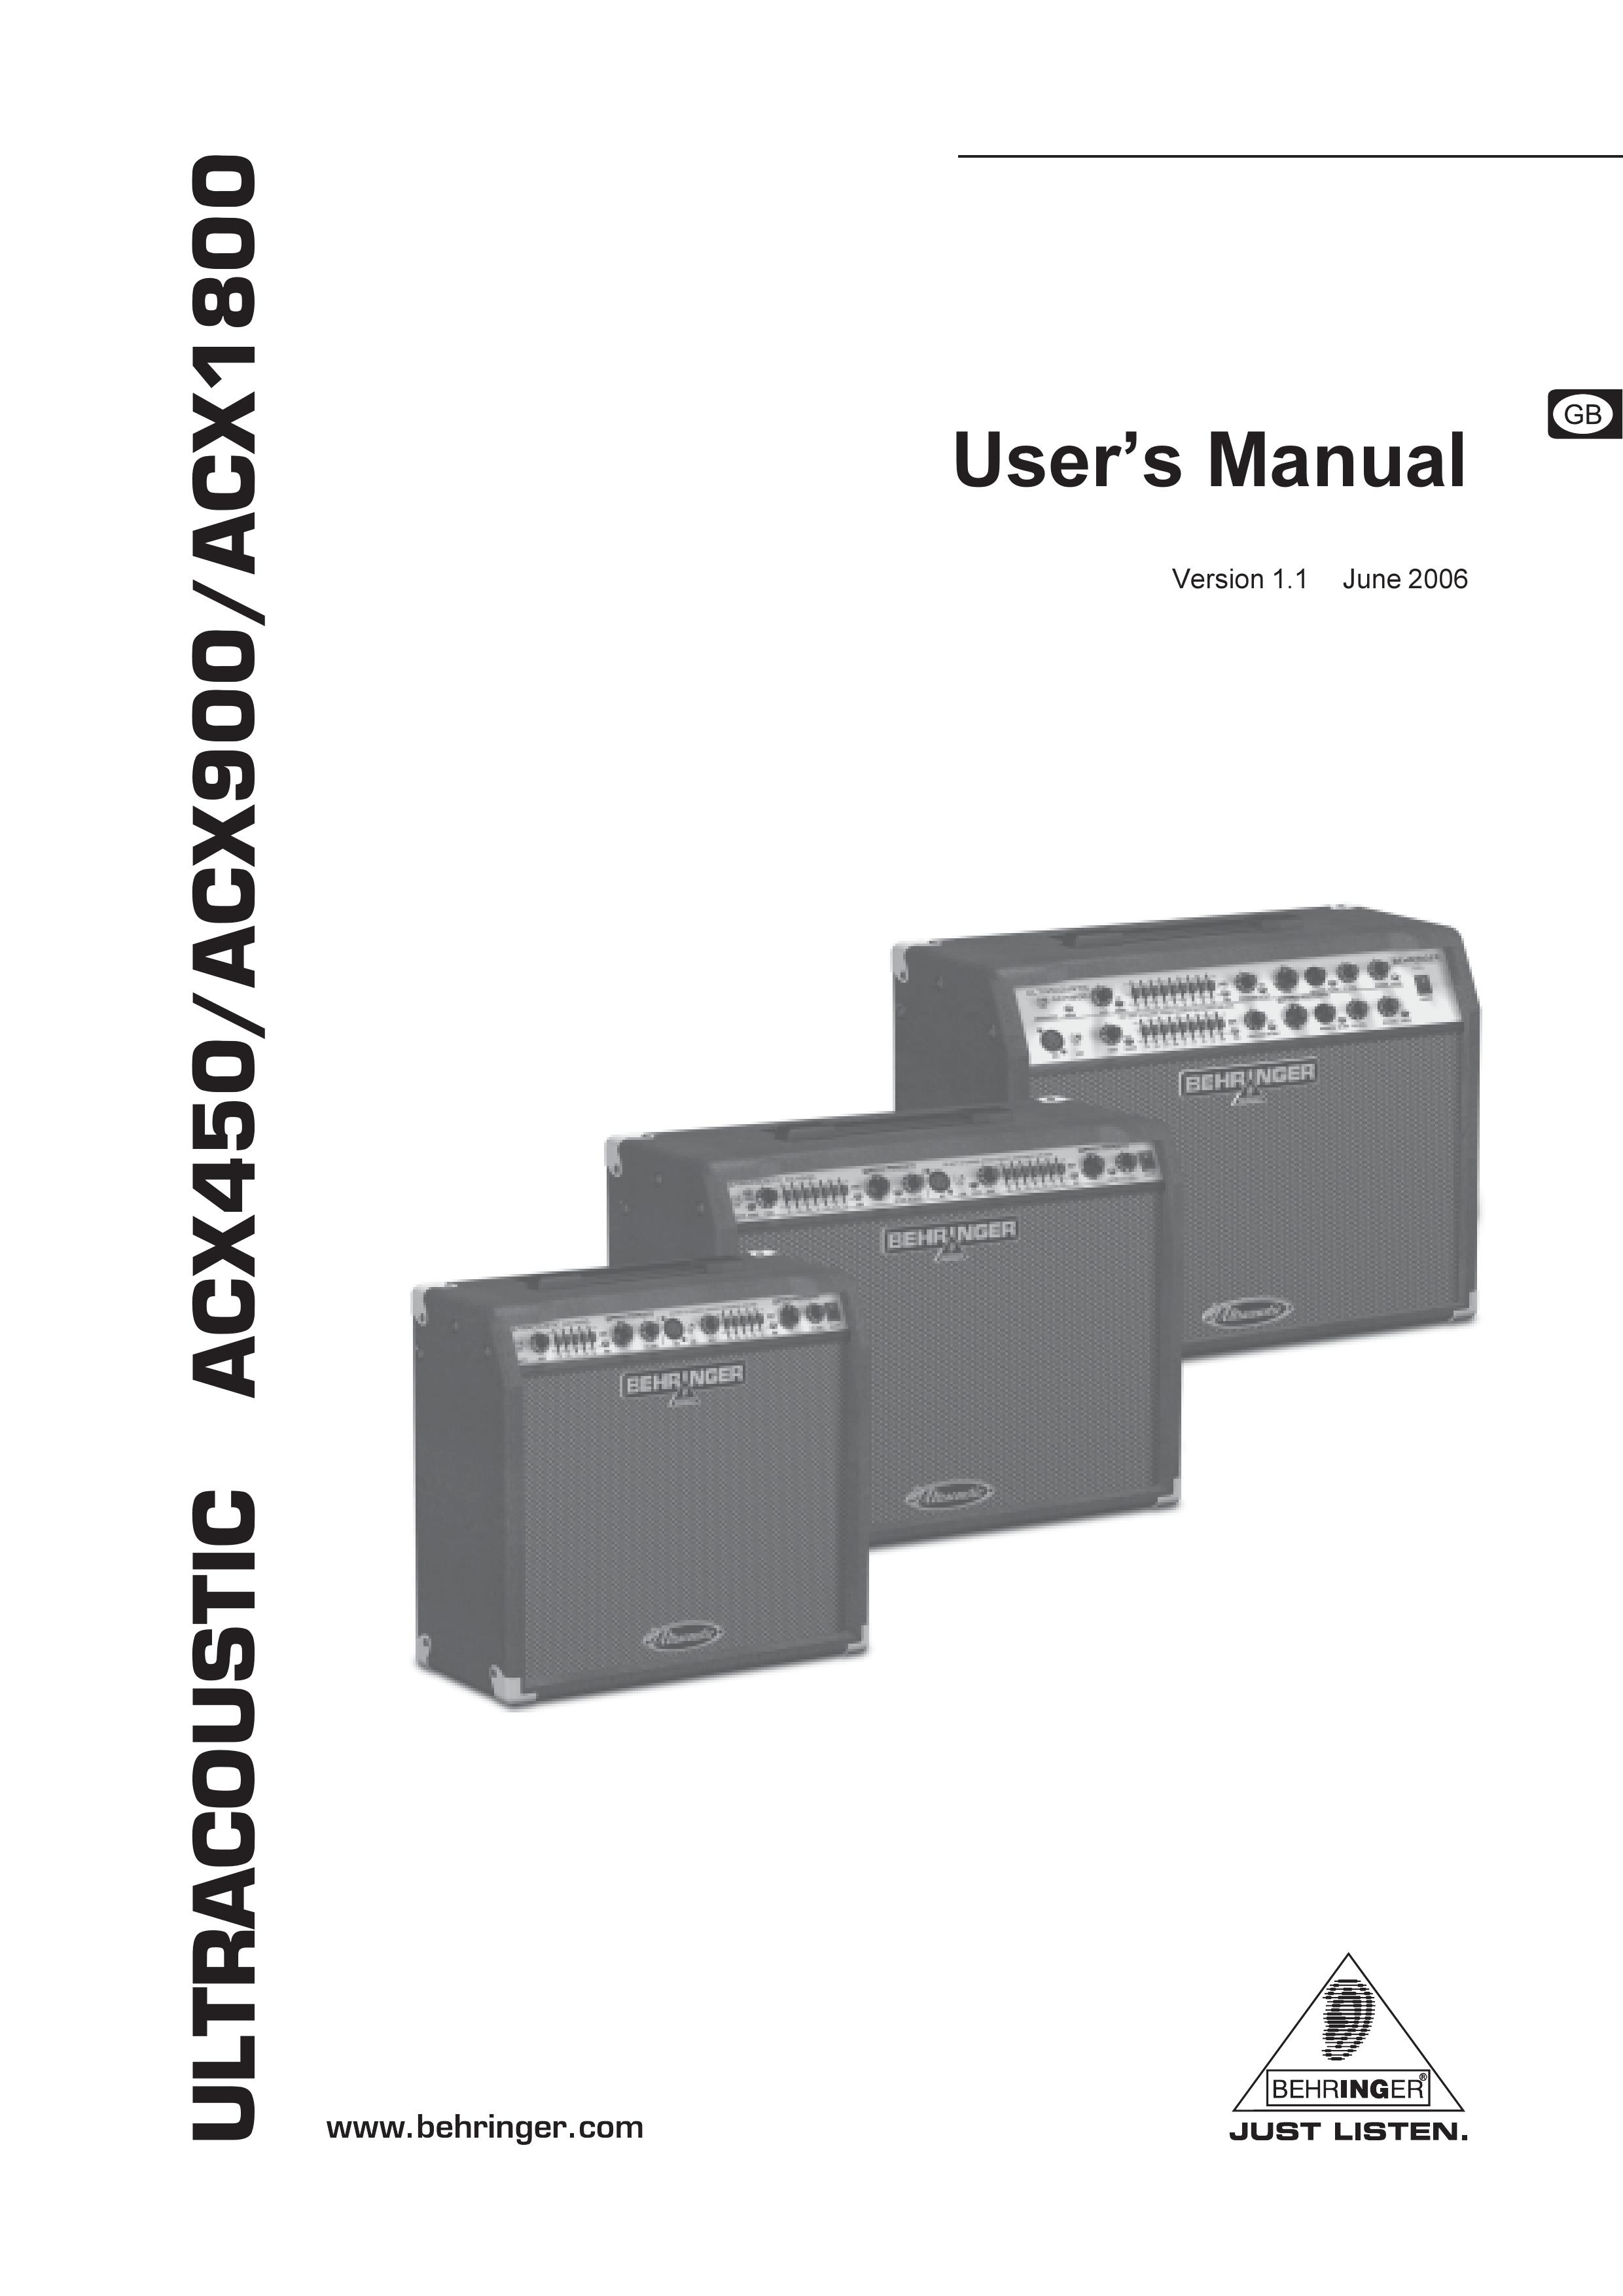 Behringer ACX900 Musical Instrument Amplifier User Manual